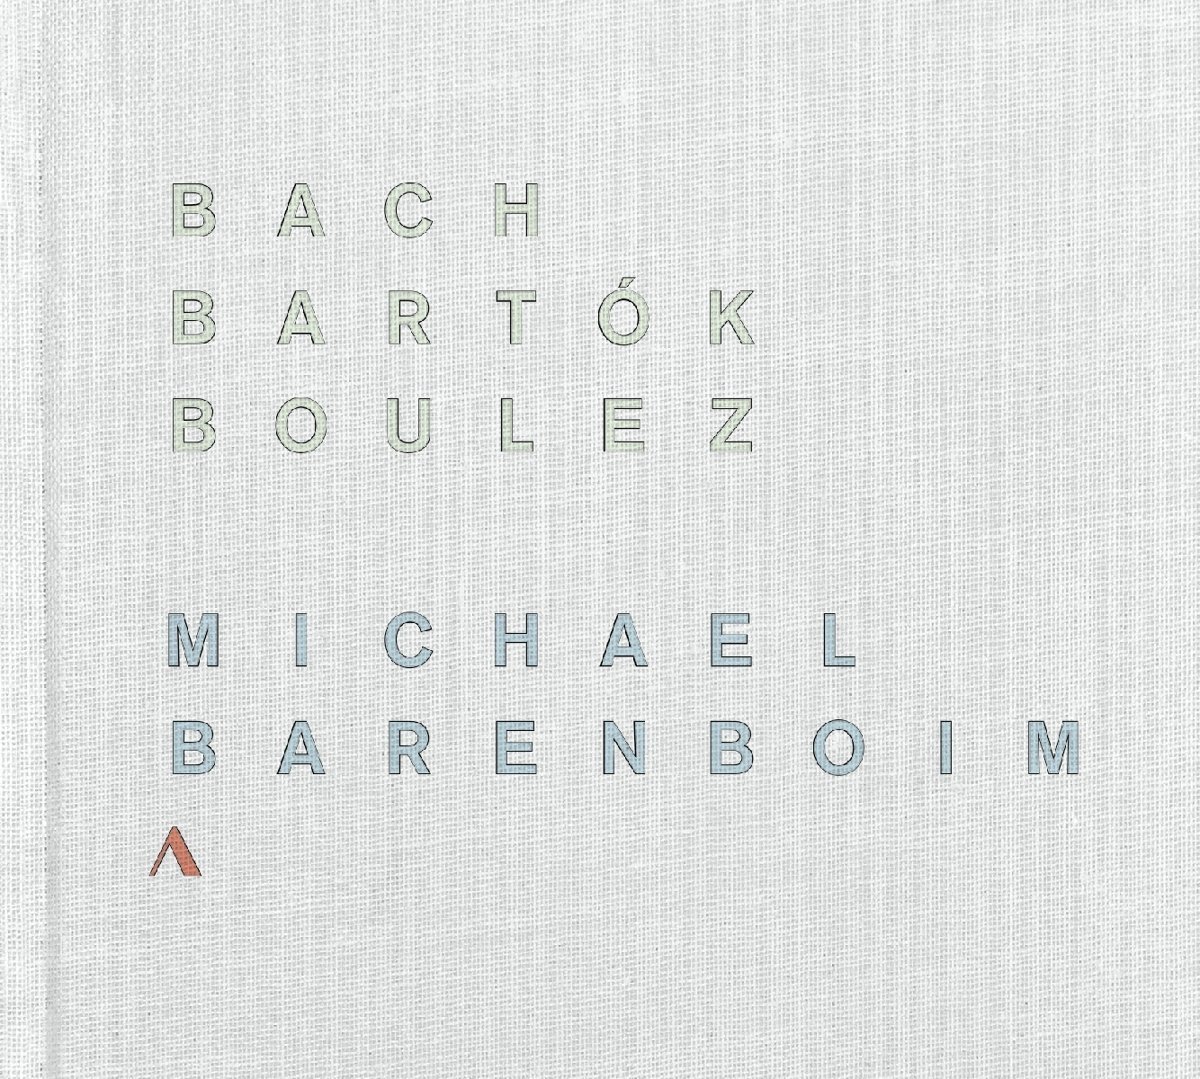 Miachael Barenboim's solo recital